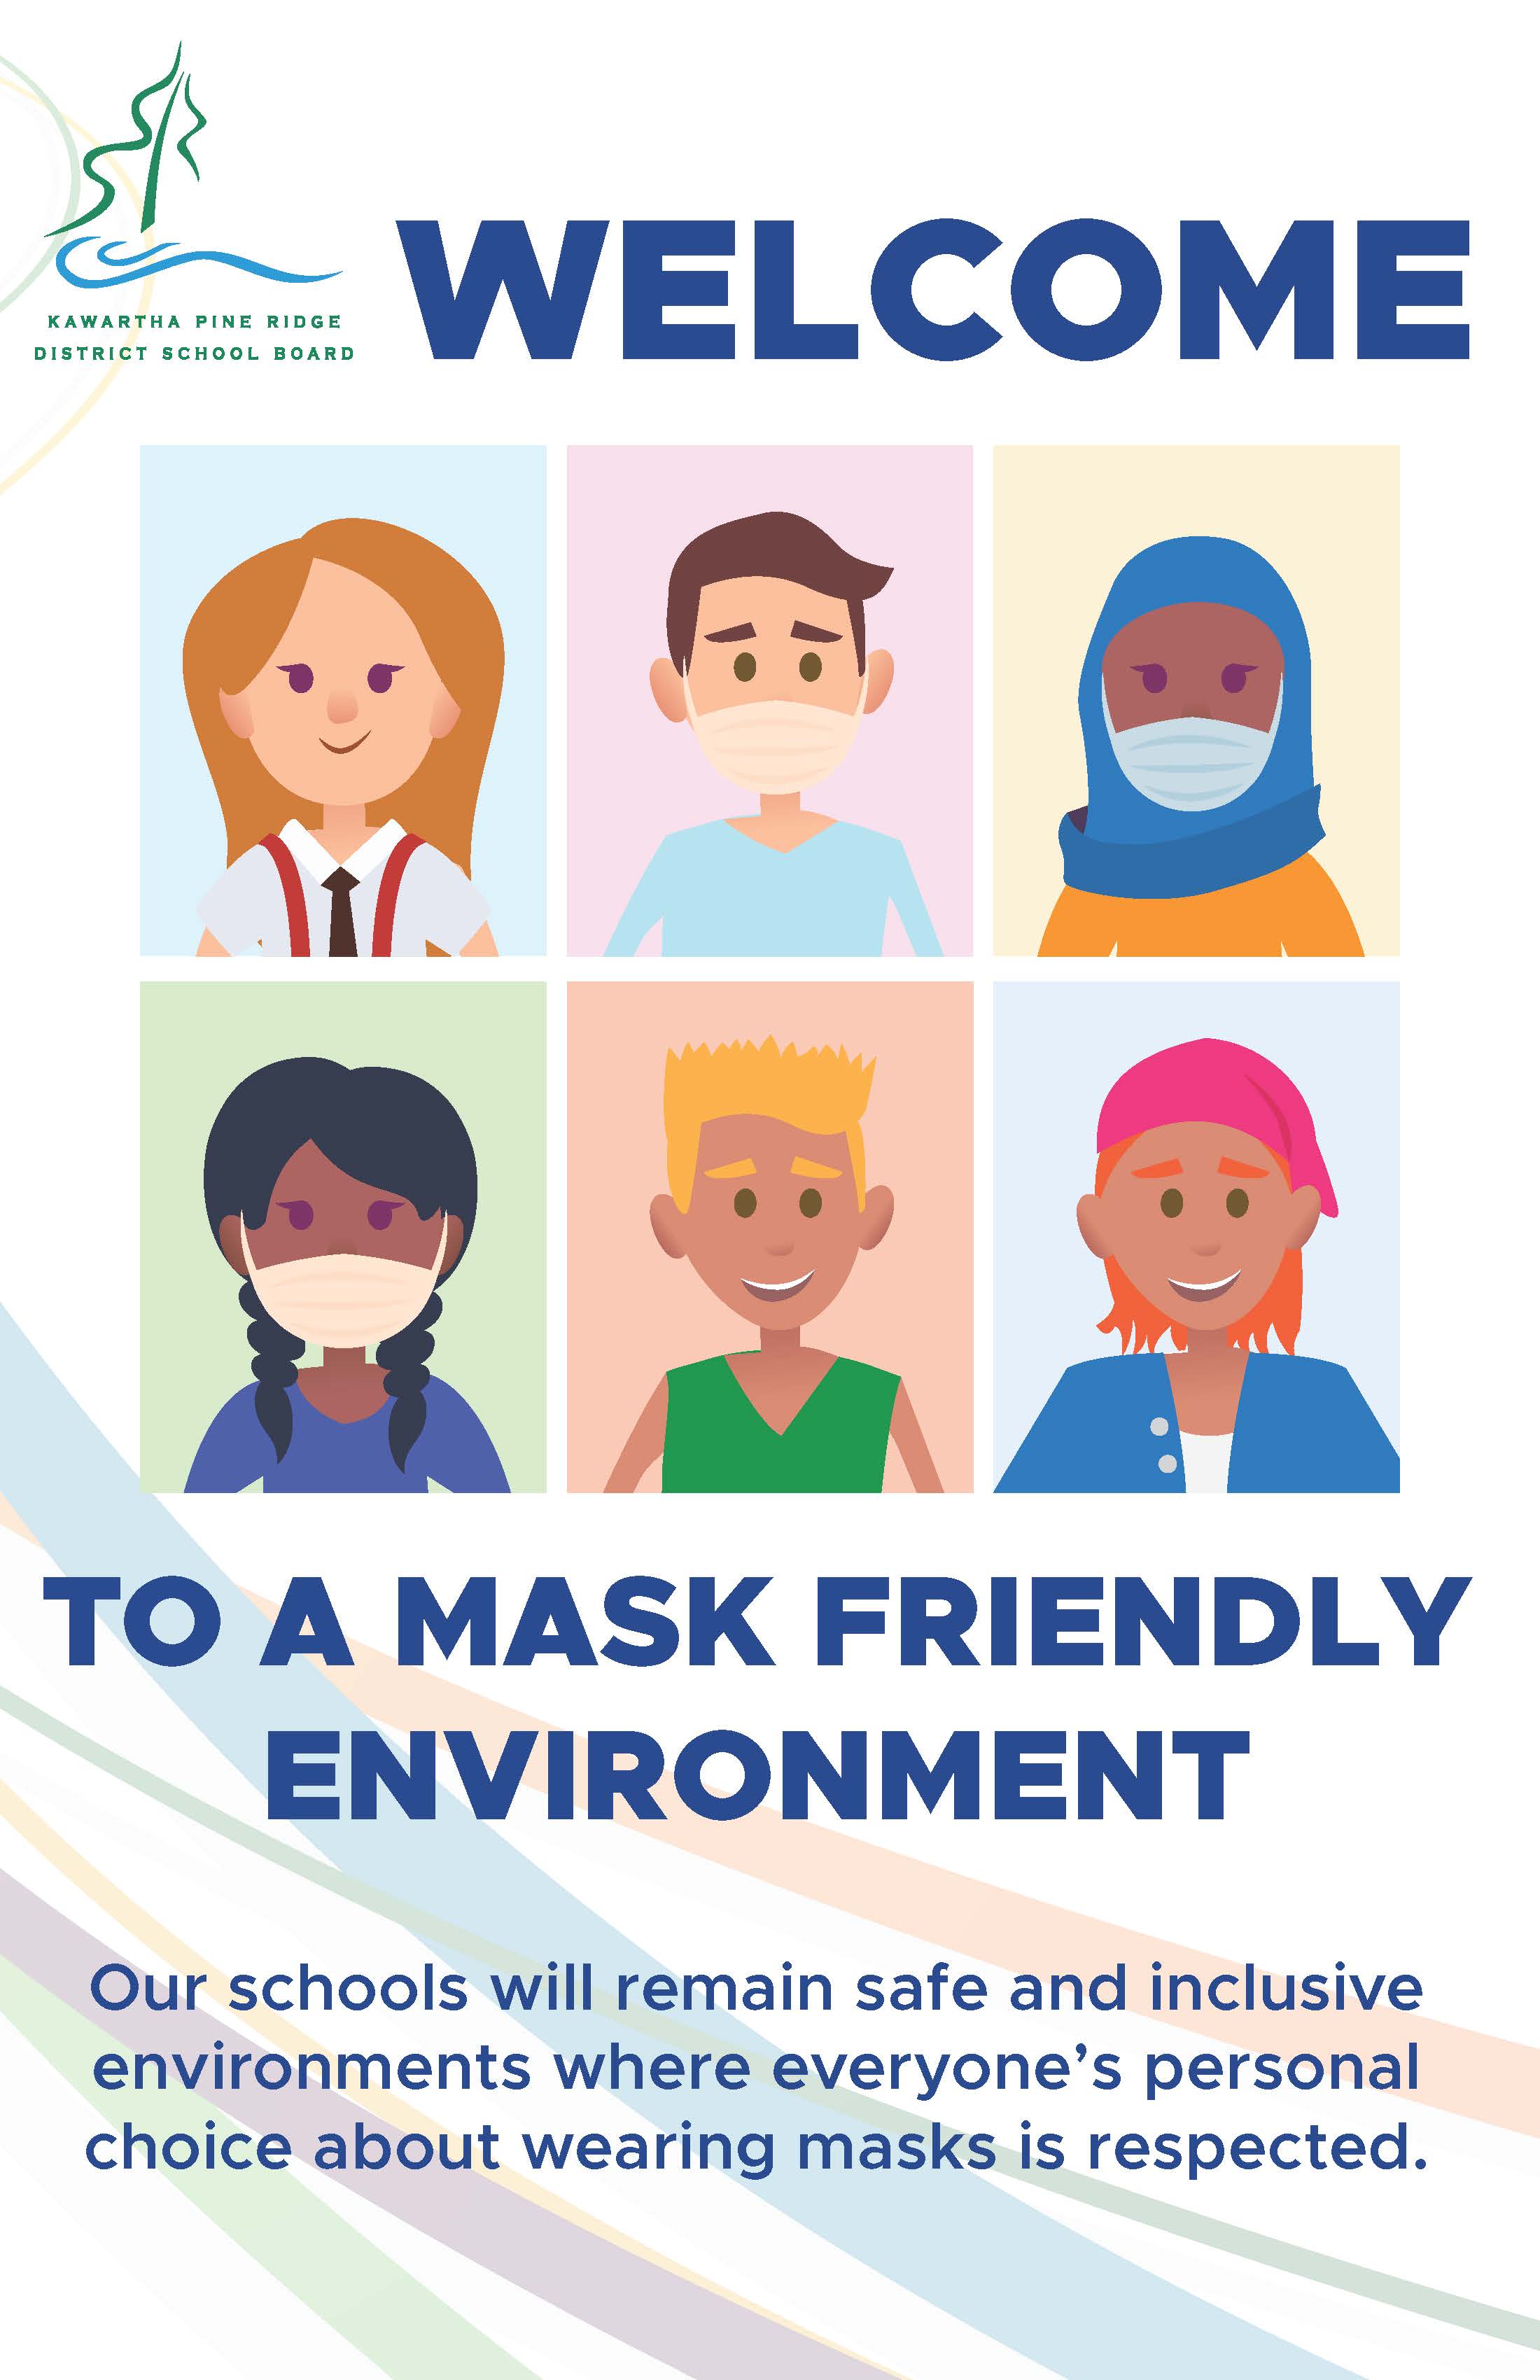 Mask friendly